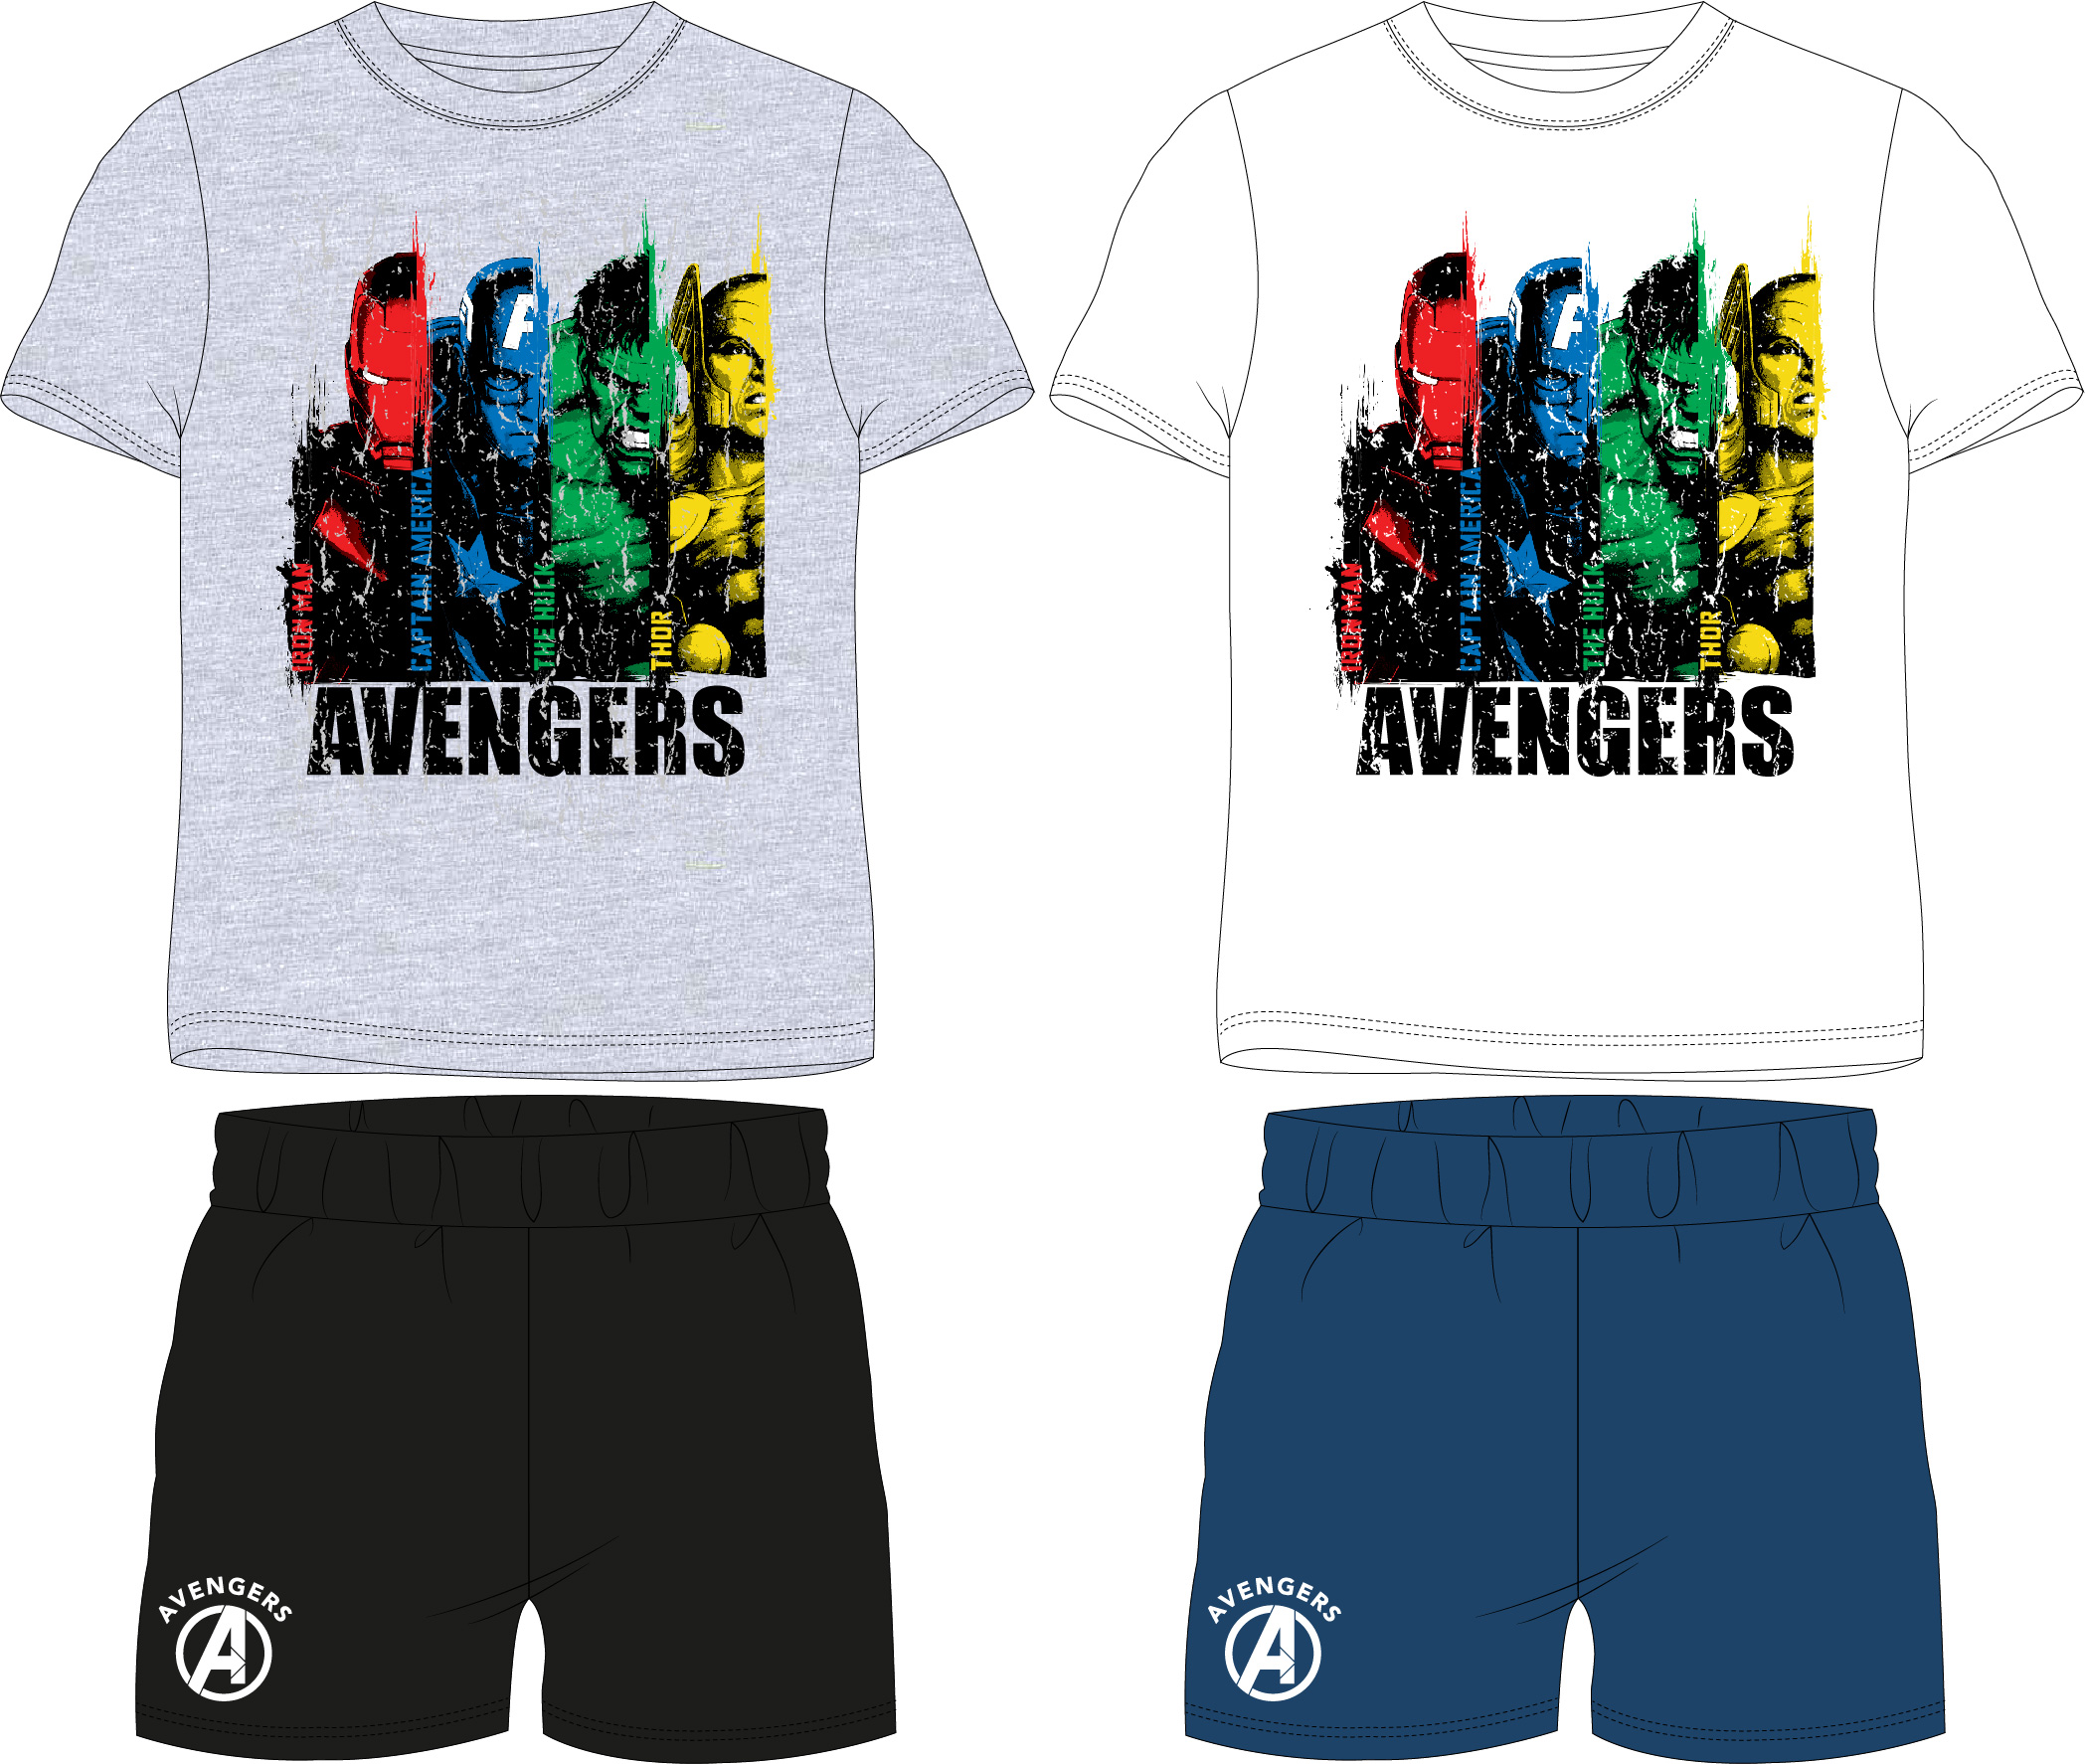 Avangers - licence Chlapecké pyžamo - Avengers 5204438, bílá / černá Barva: Bílá, Velikost: 128-140